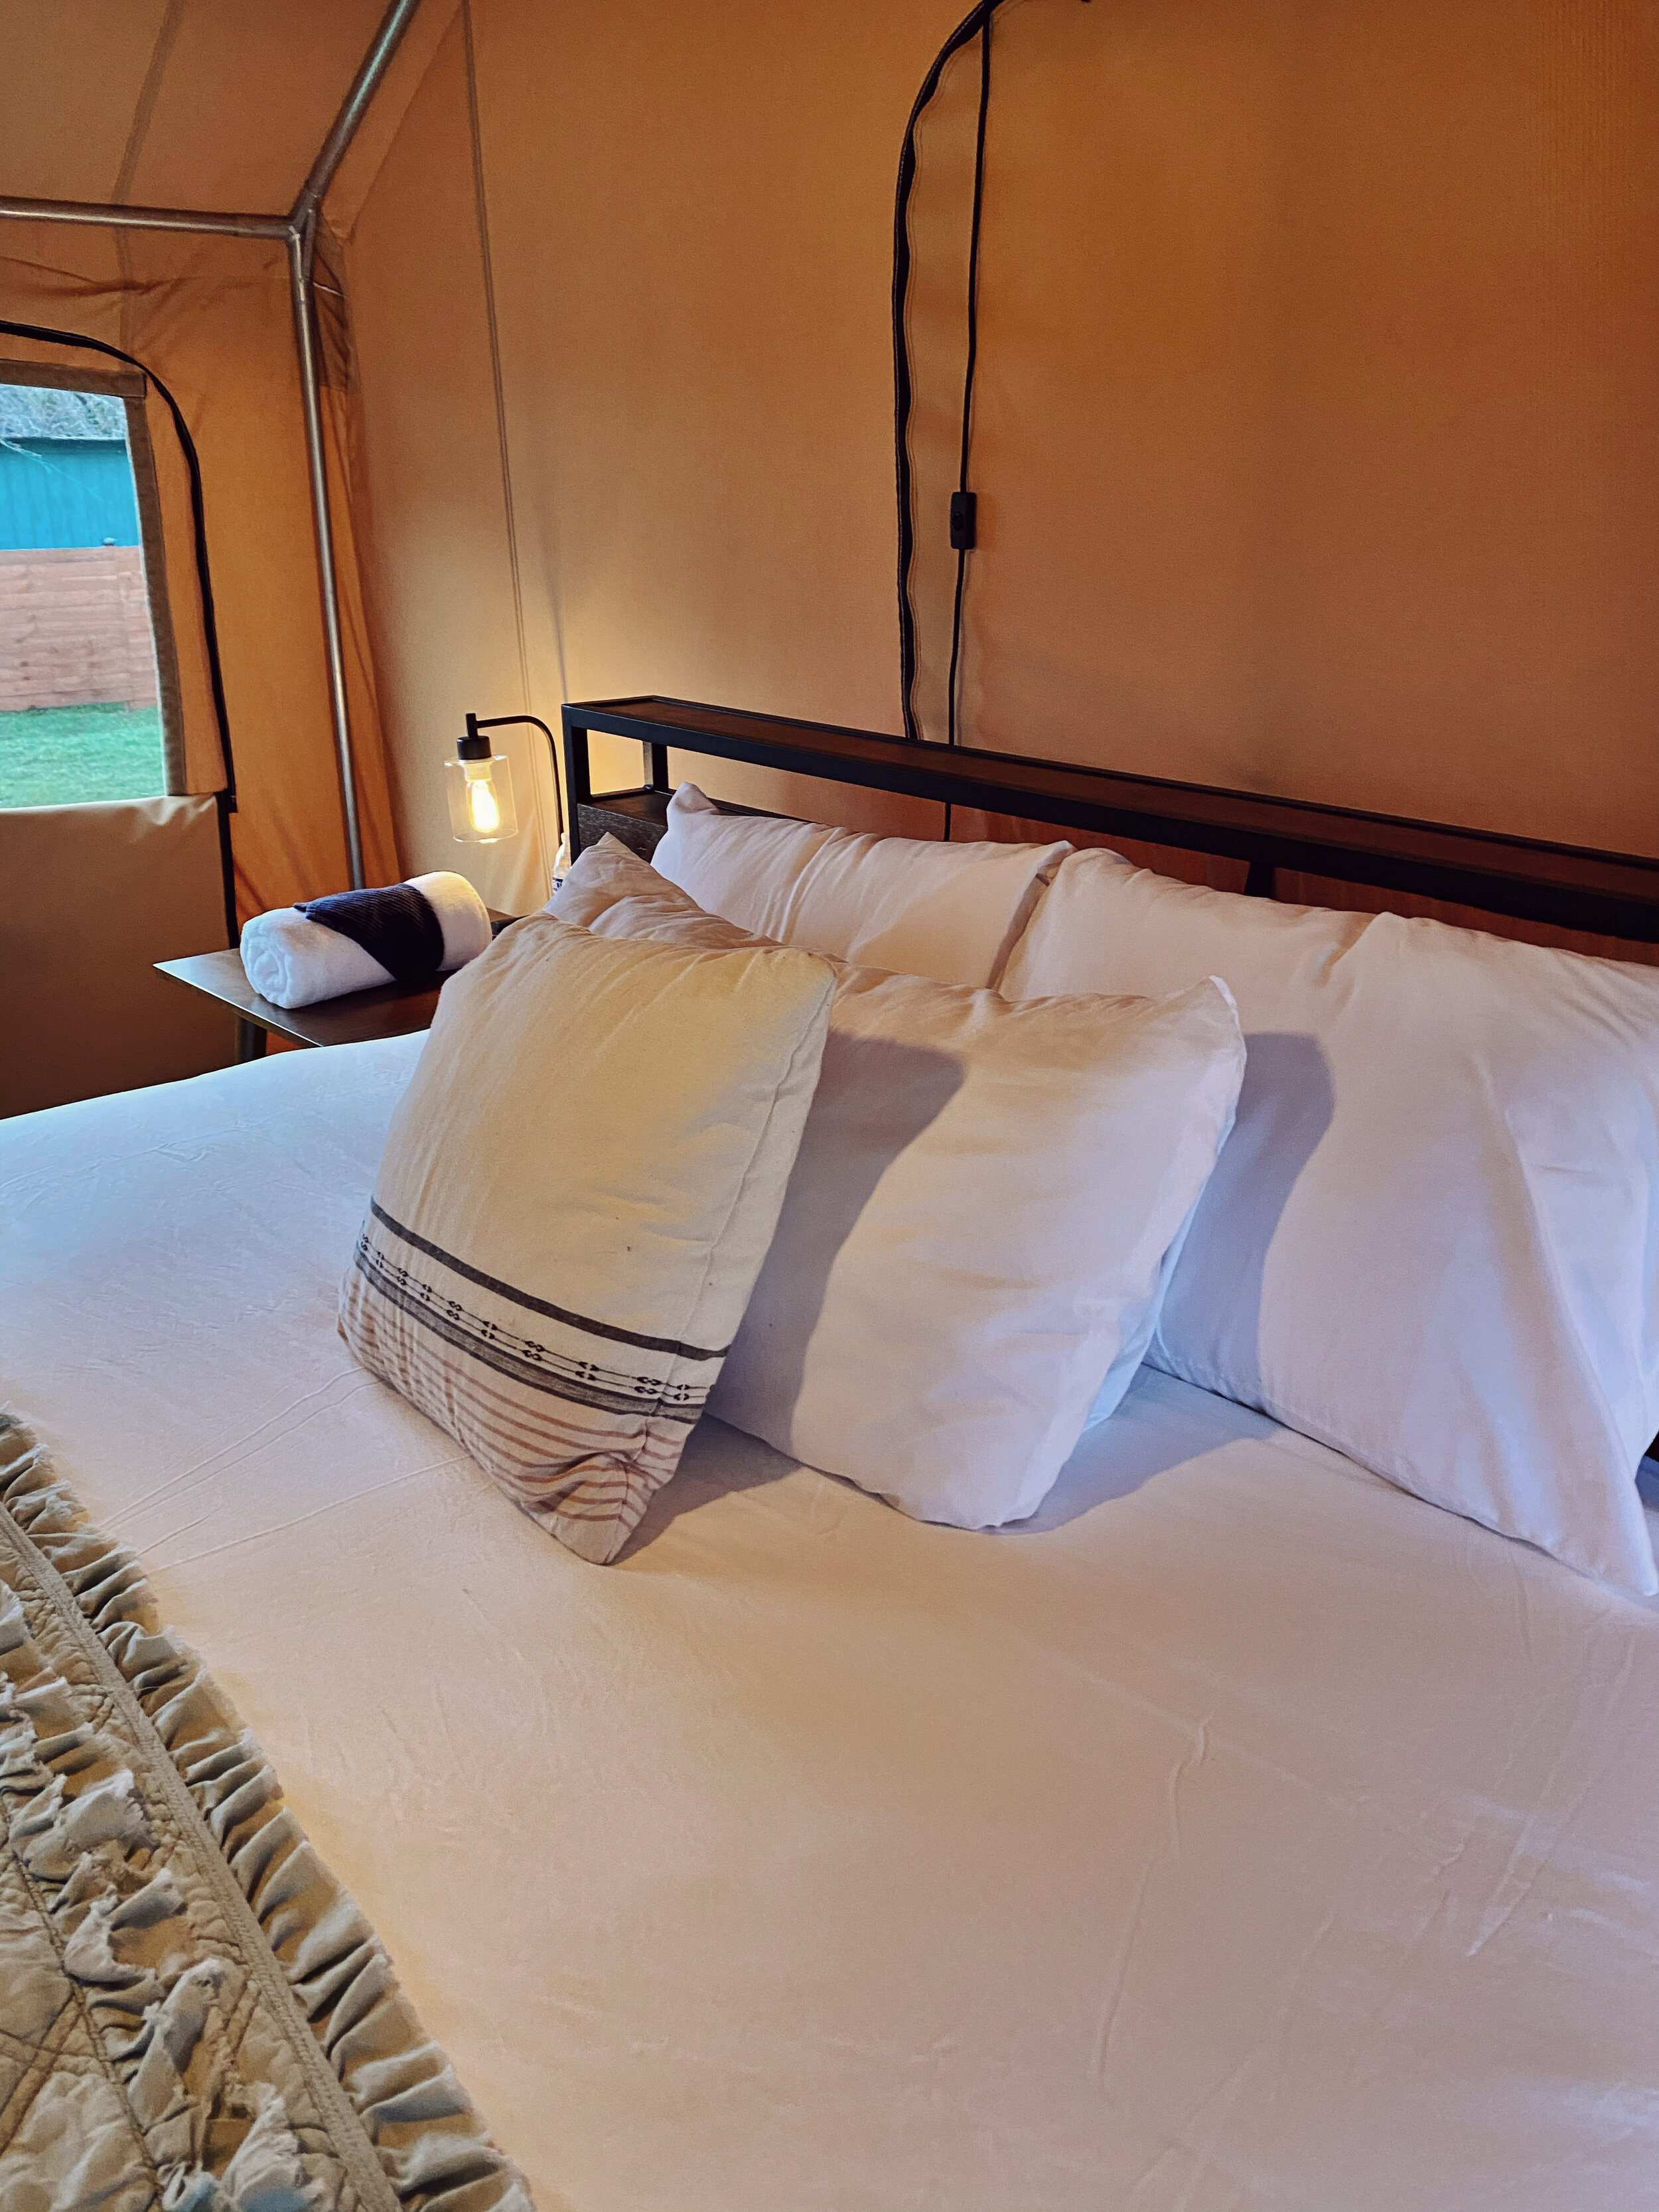 Luxurious bedding at the Pacific Dunes resort Copalis Beach Washington 